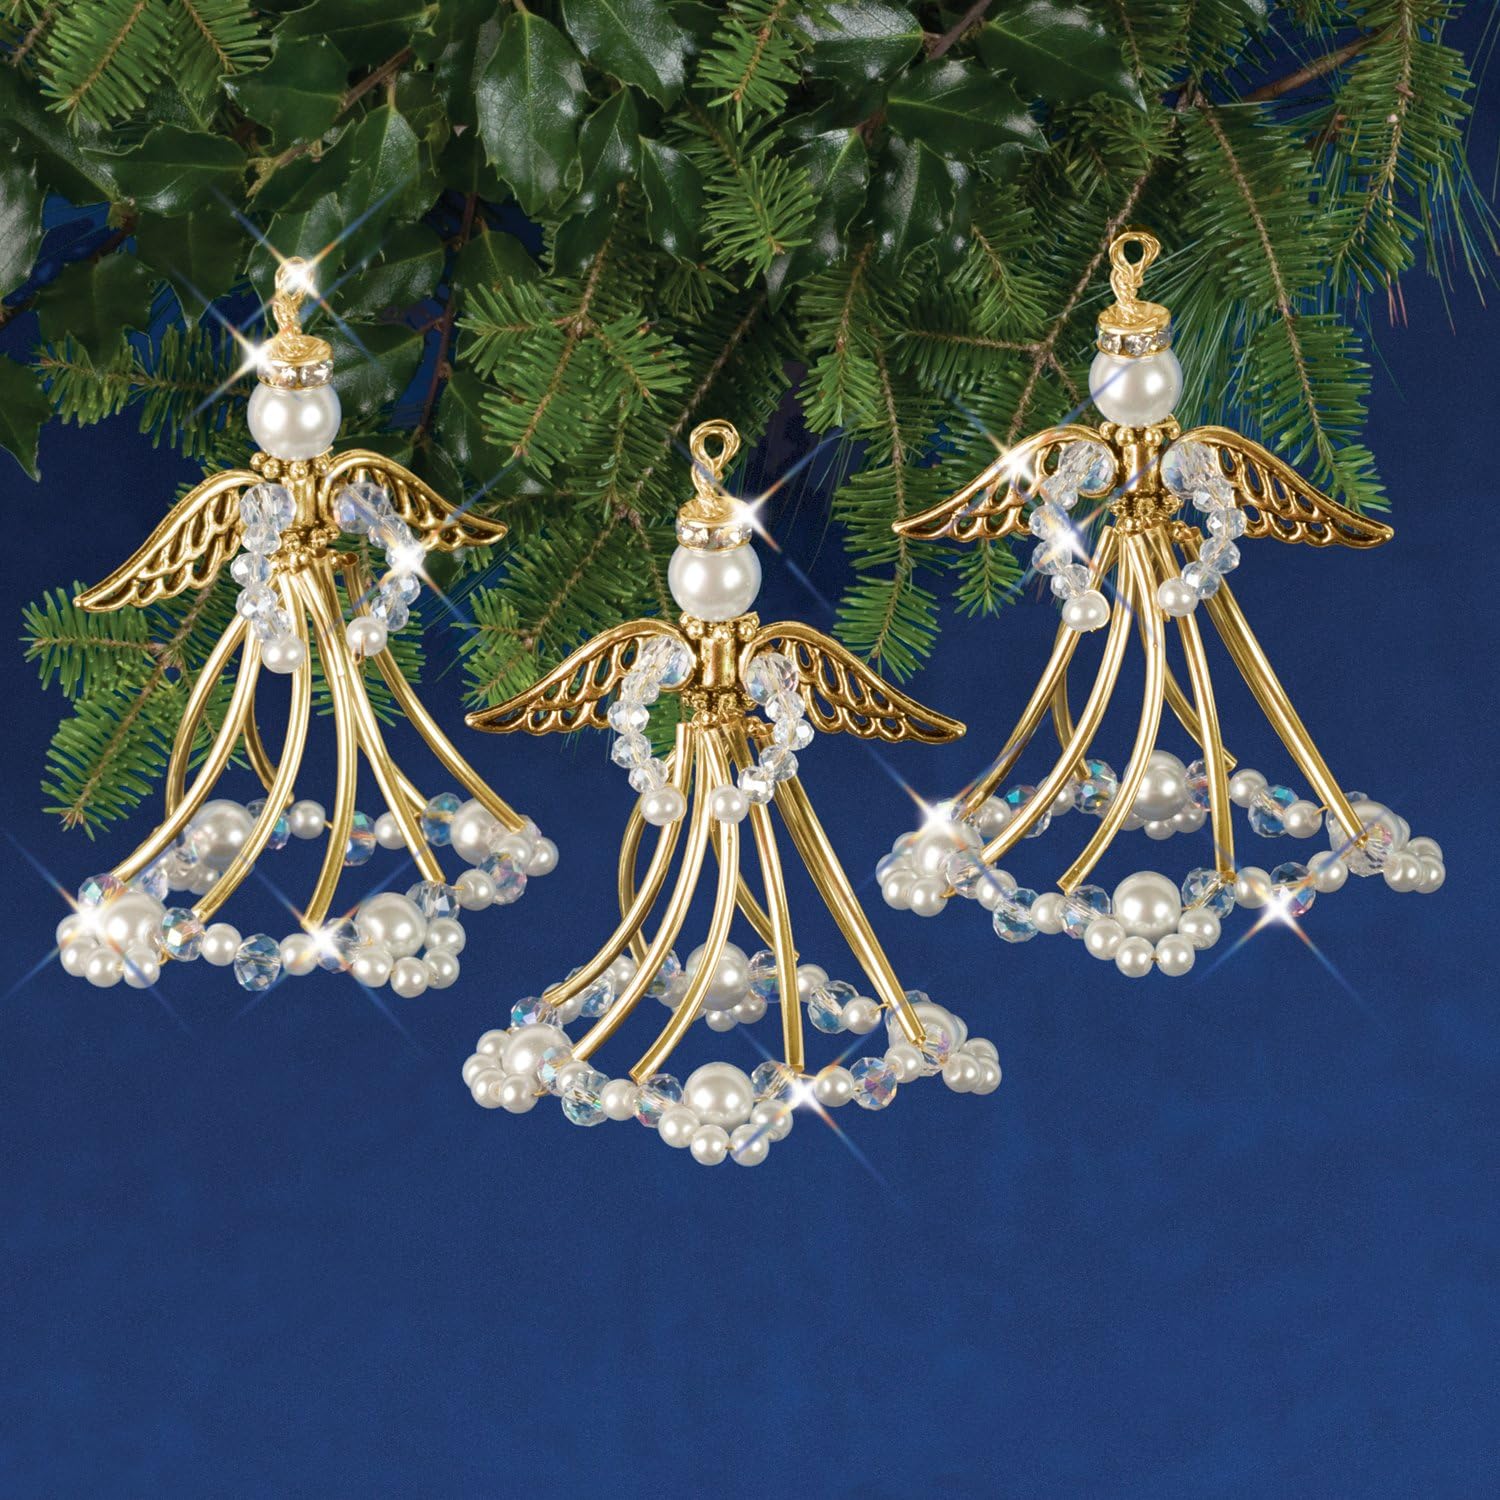 Angelic Elegance Ornaments